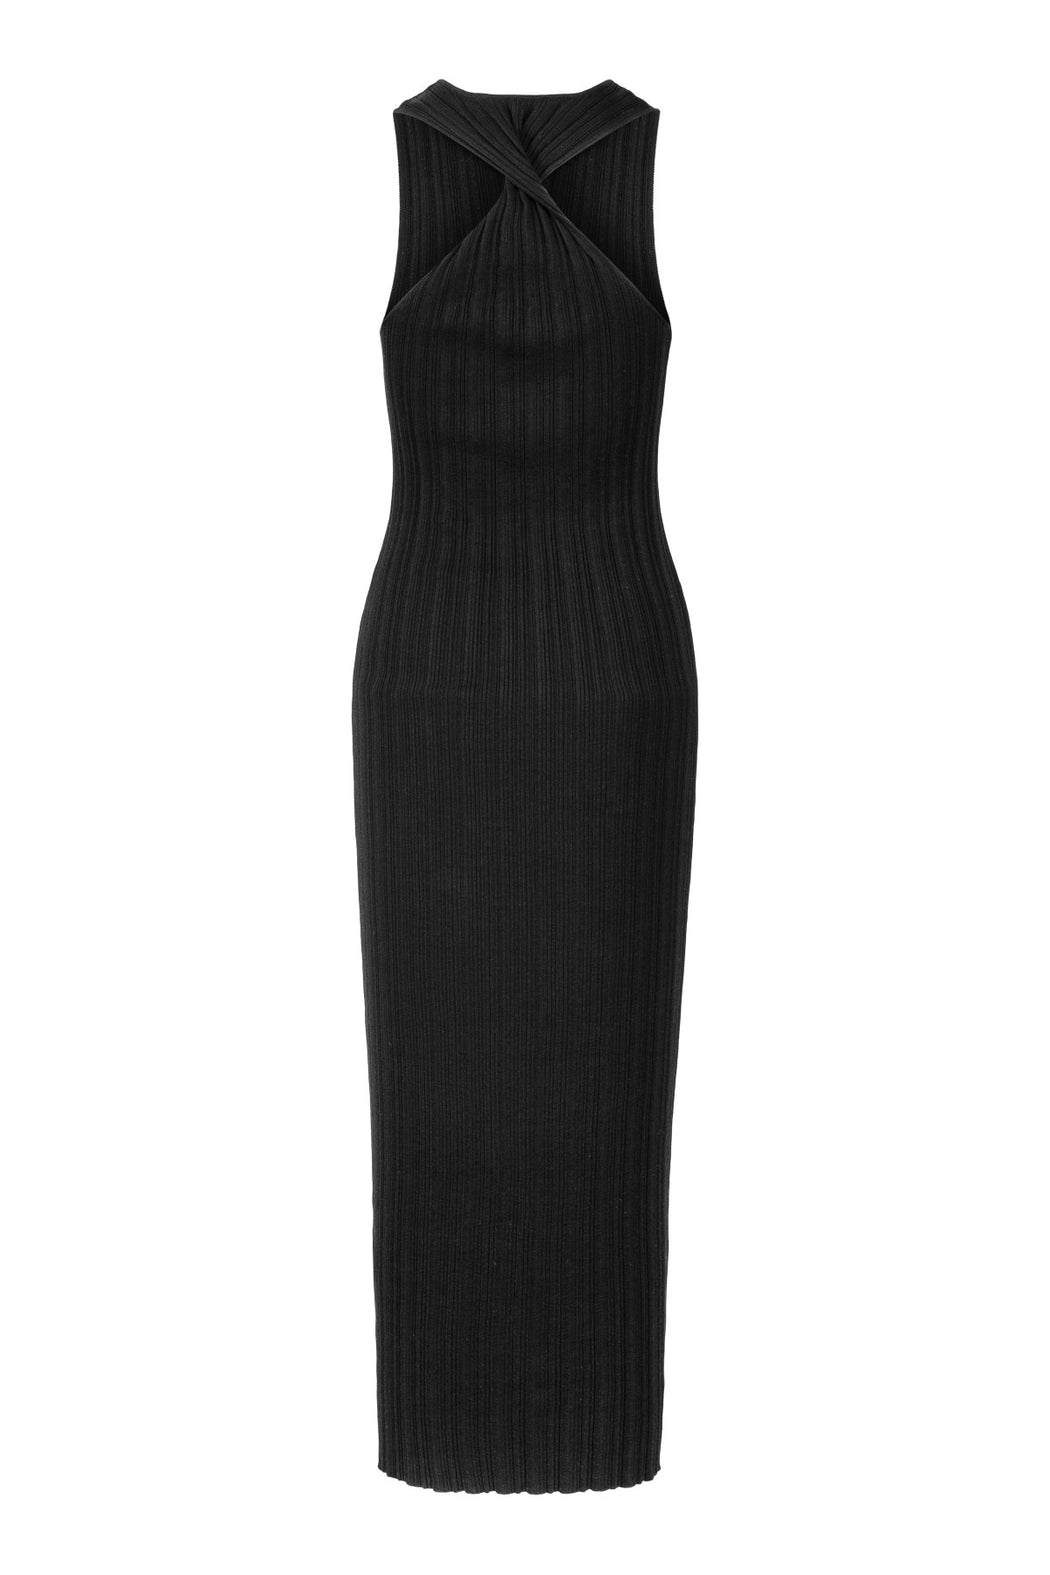 Envelope1976 Malibu dress, Black Dress Black